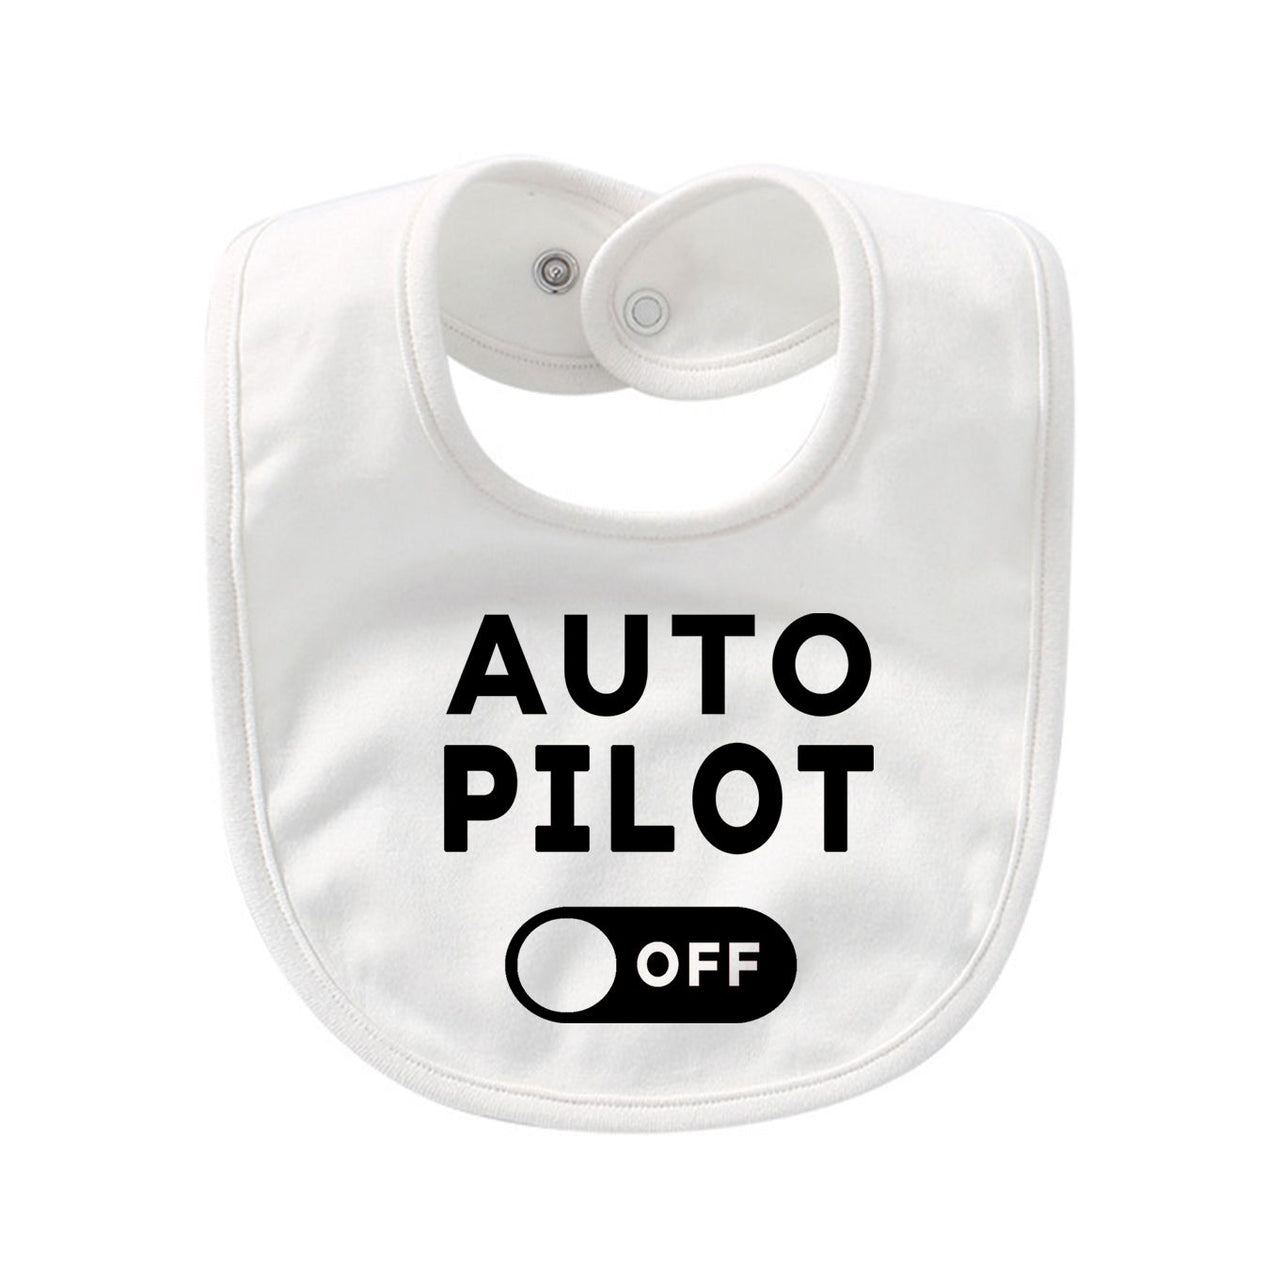 Auto Pilot Off Designed Baby Saliva & Feeding Towels